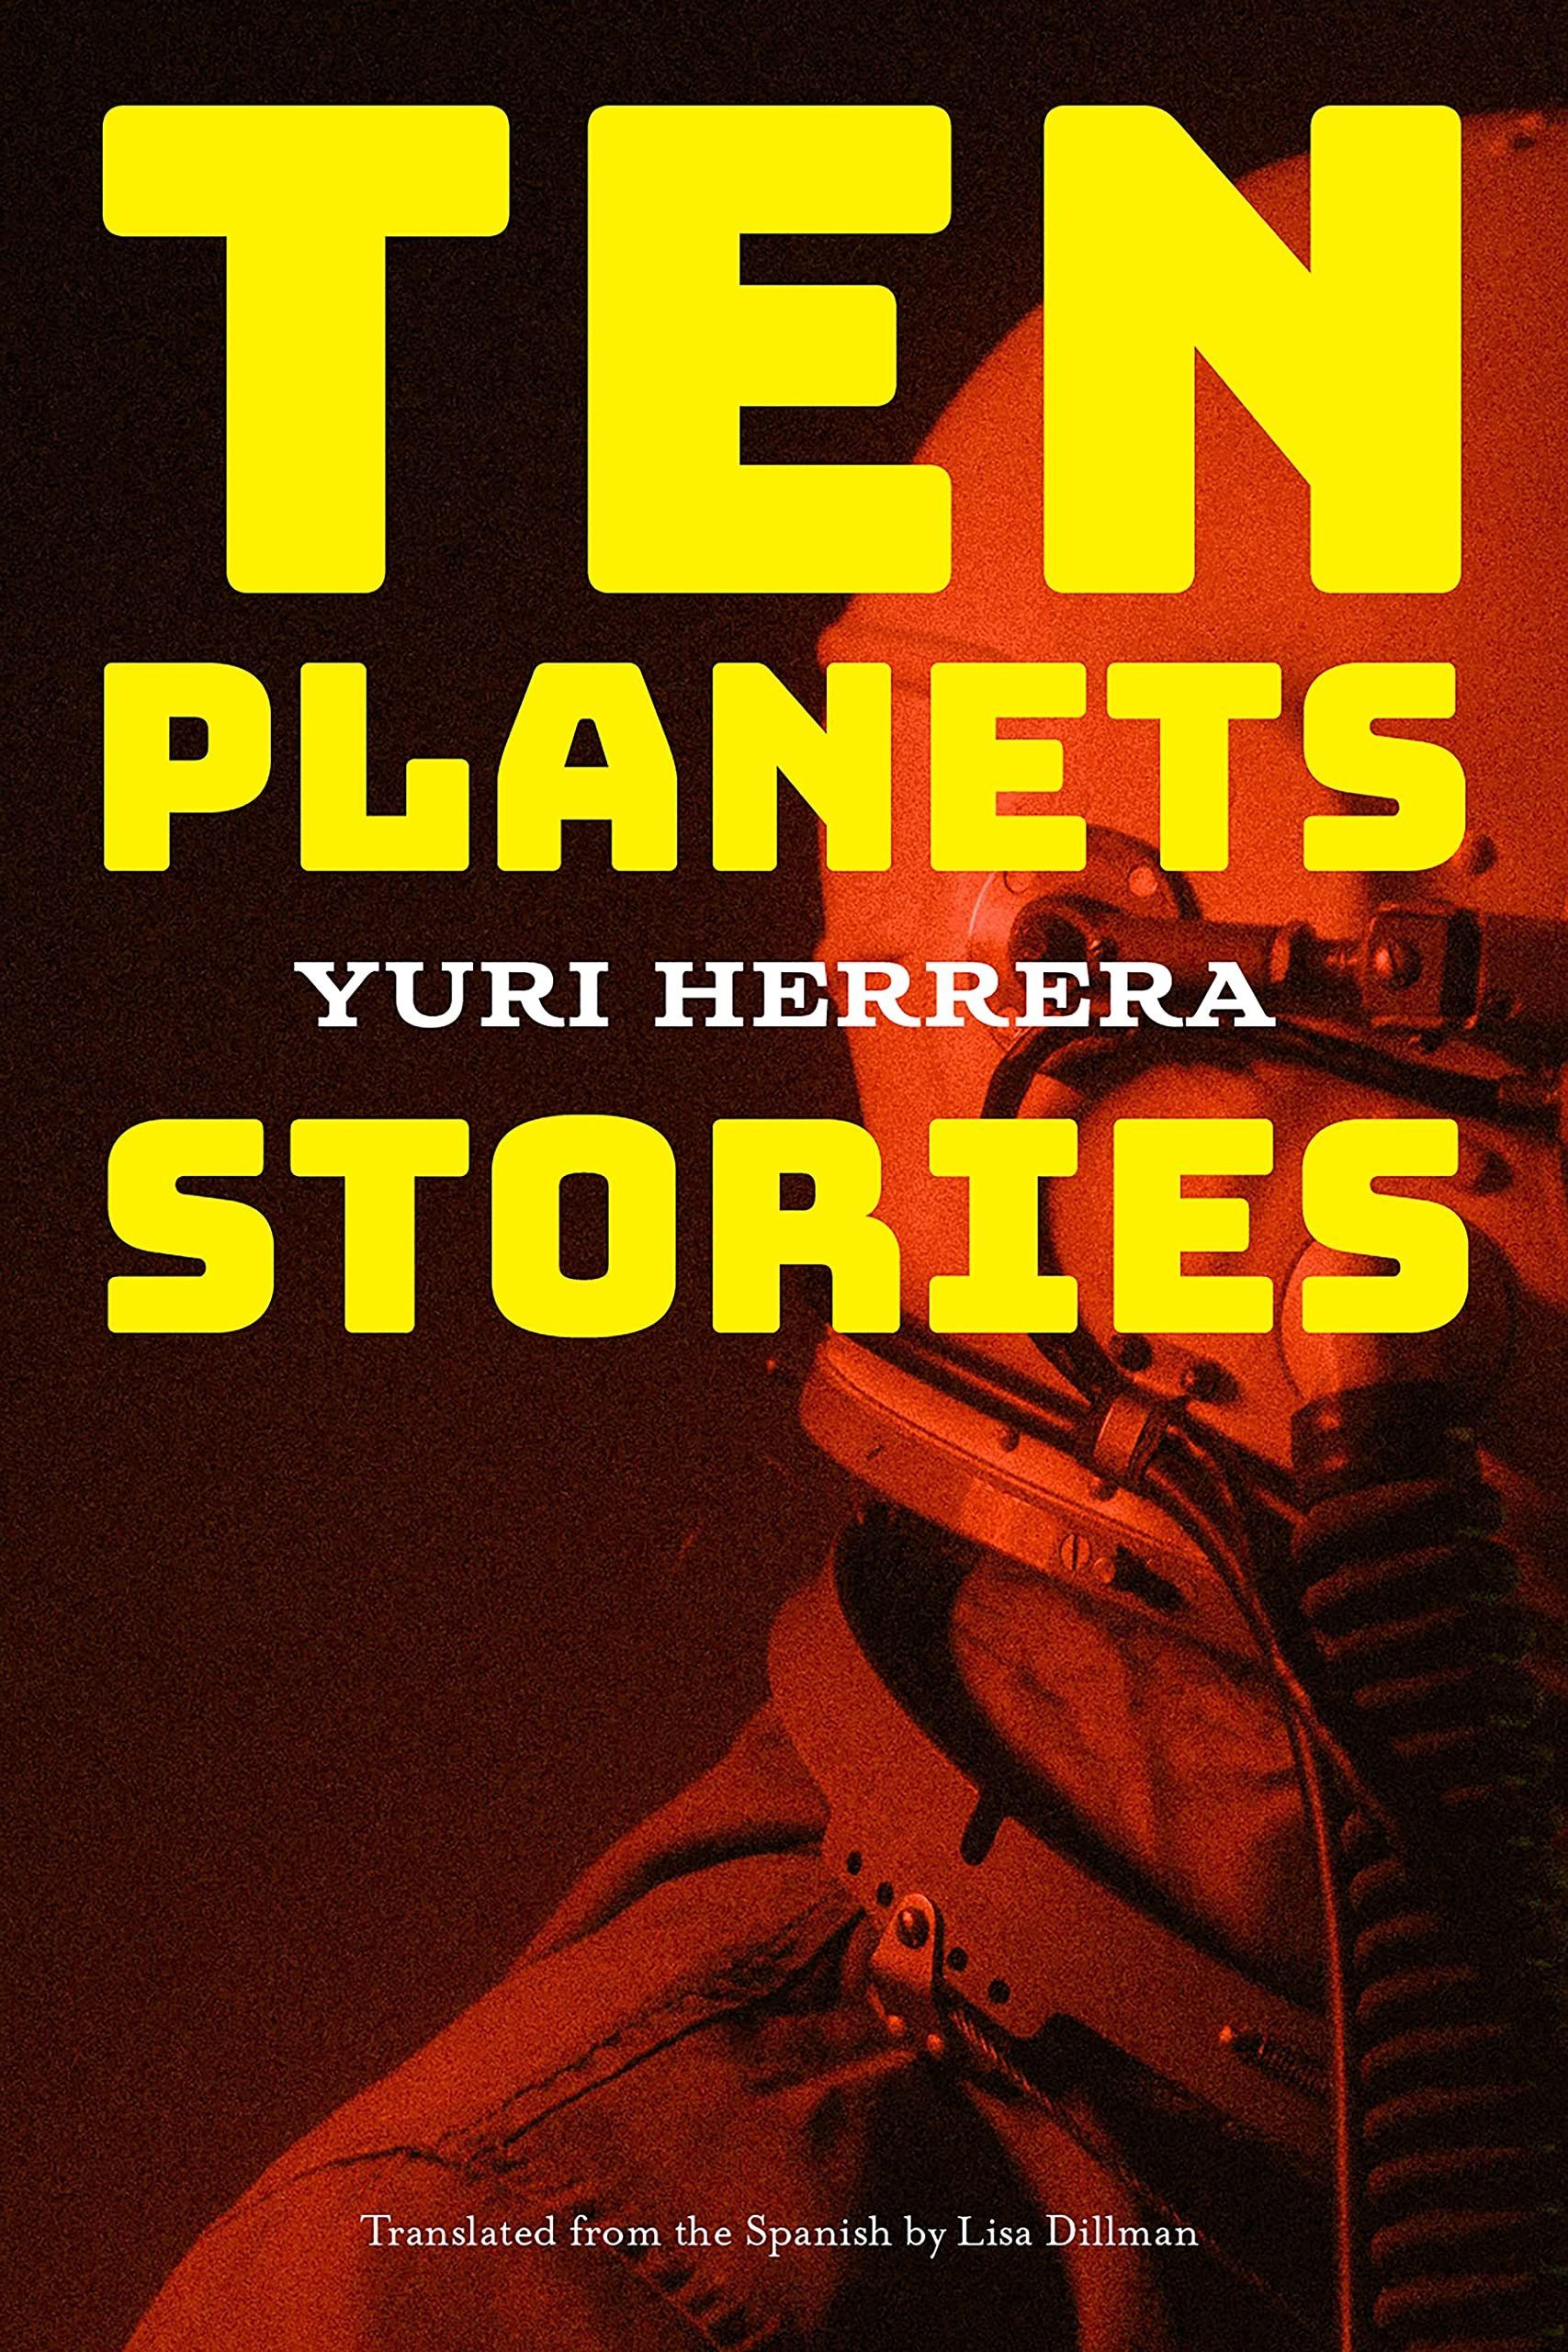 Everyone Is Going Away: On Yuri Herrera’s “Ten Planets”